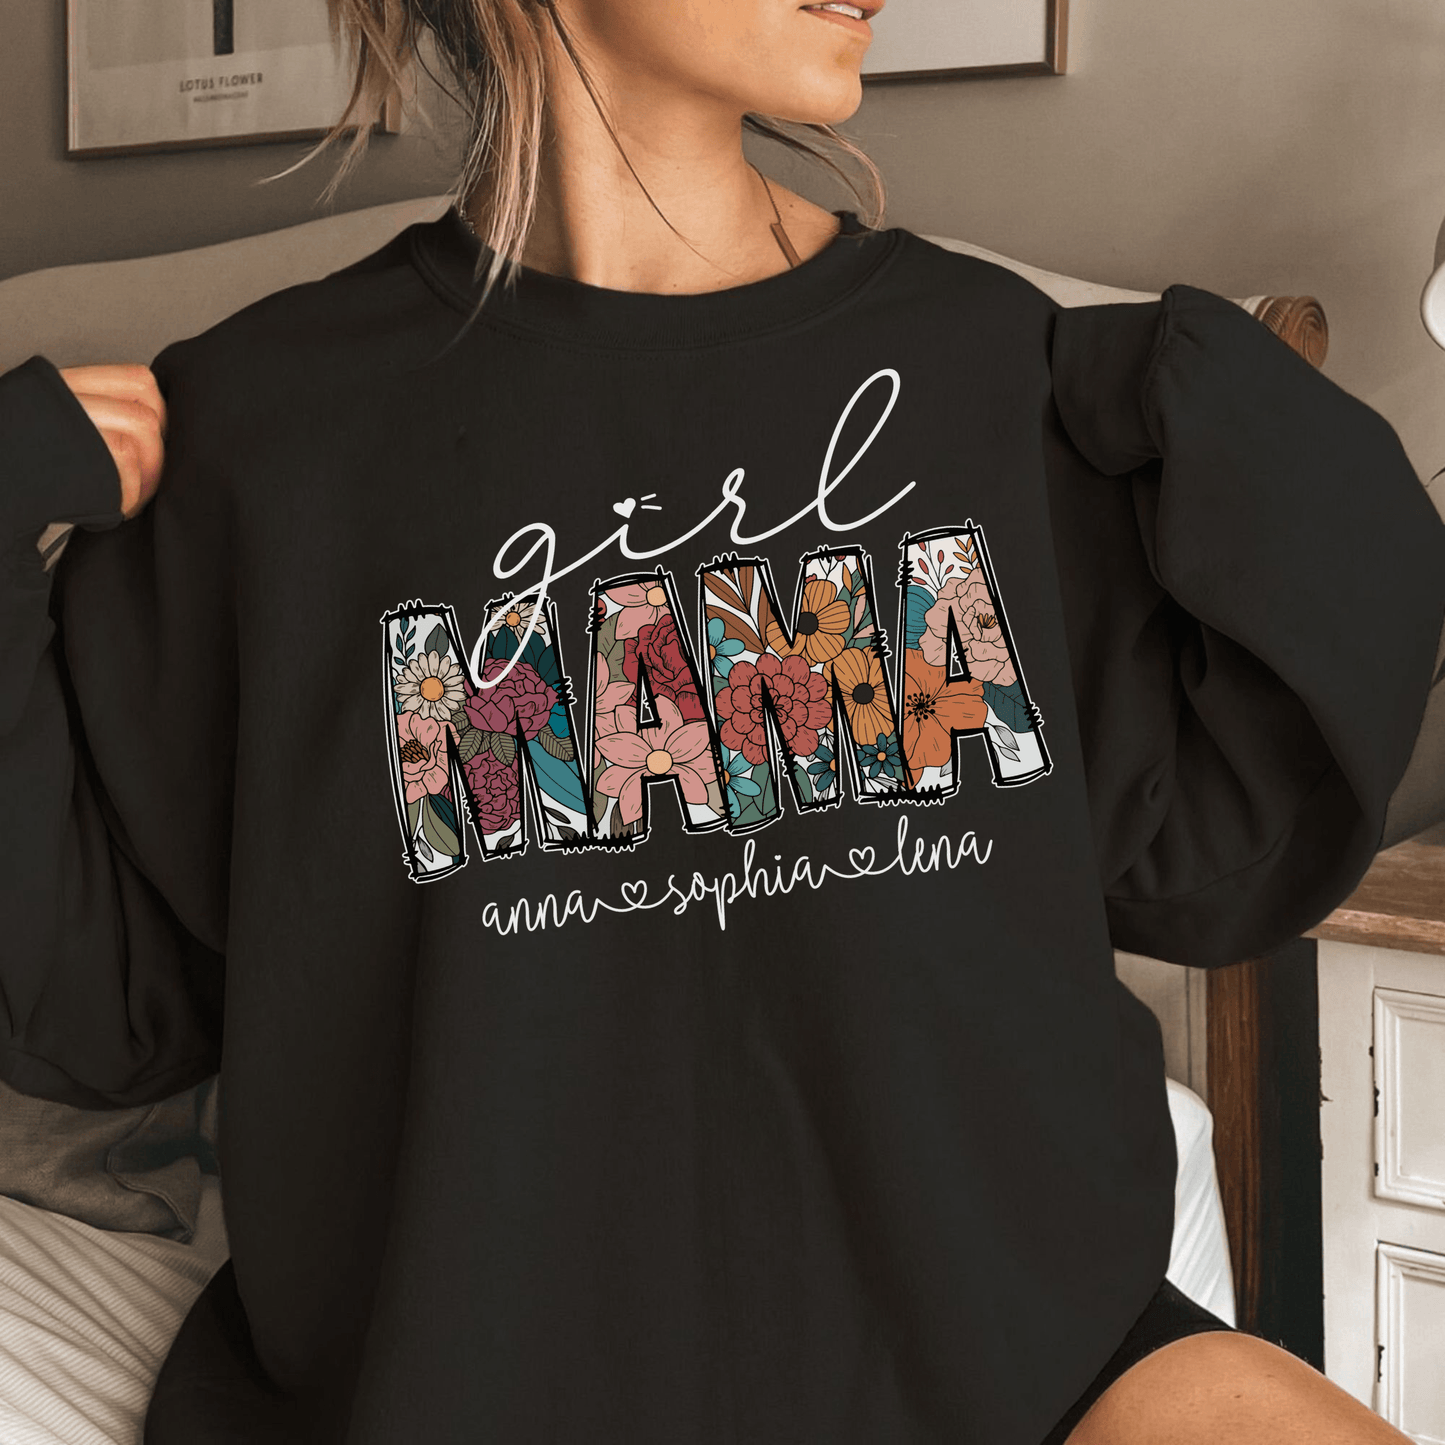 Maßgeschneidertes Mama-Shirt: Floral 'Girl Mama' mit Wunschnamen - GiftHaus